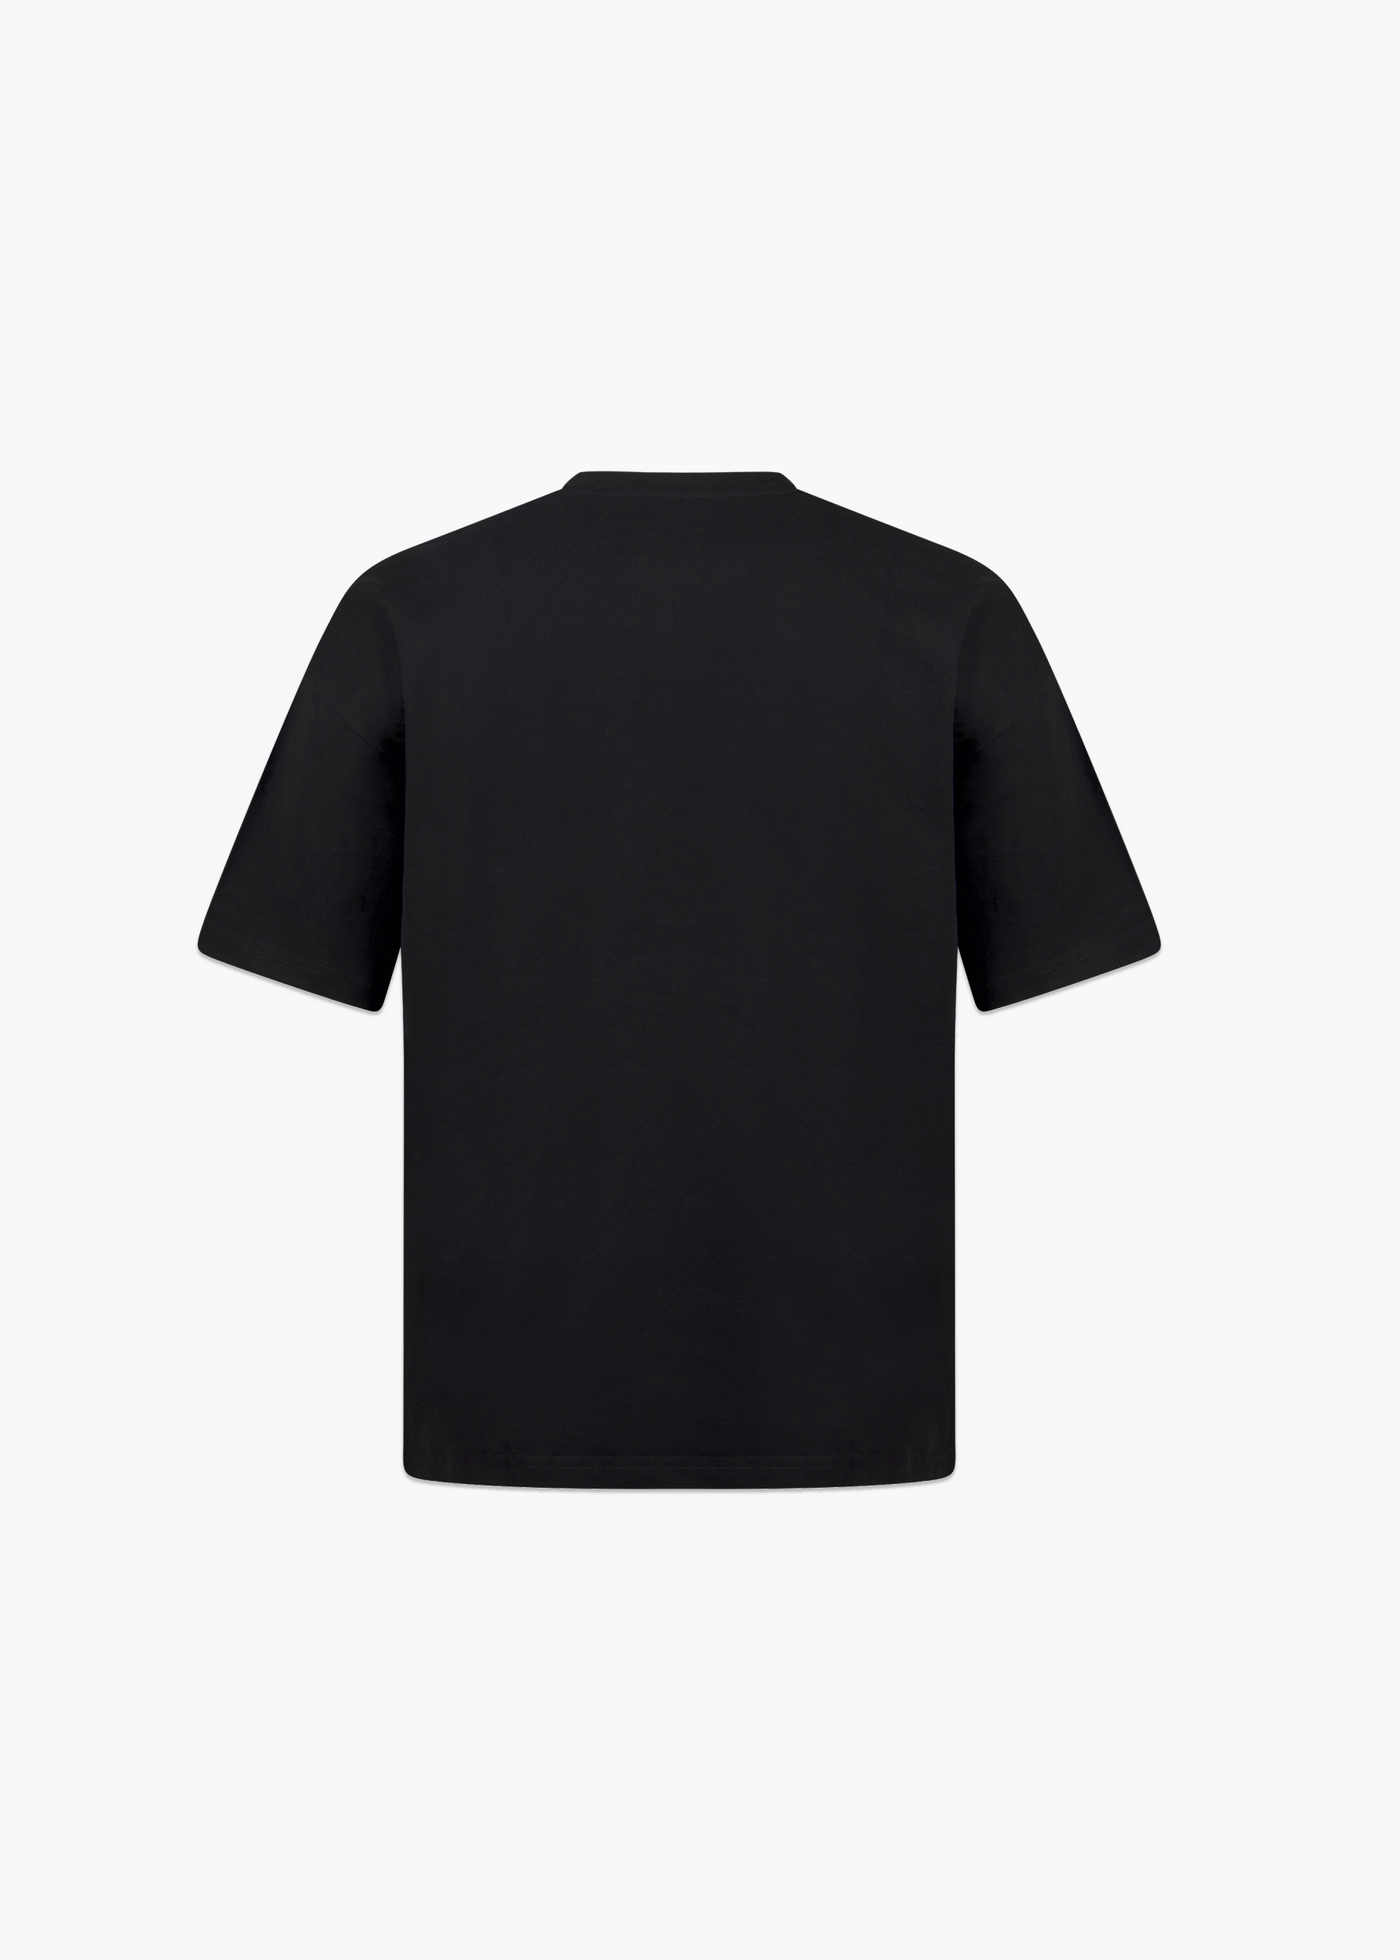 Black oversized t-shirt